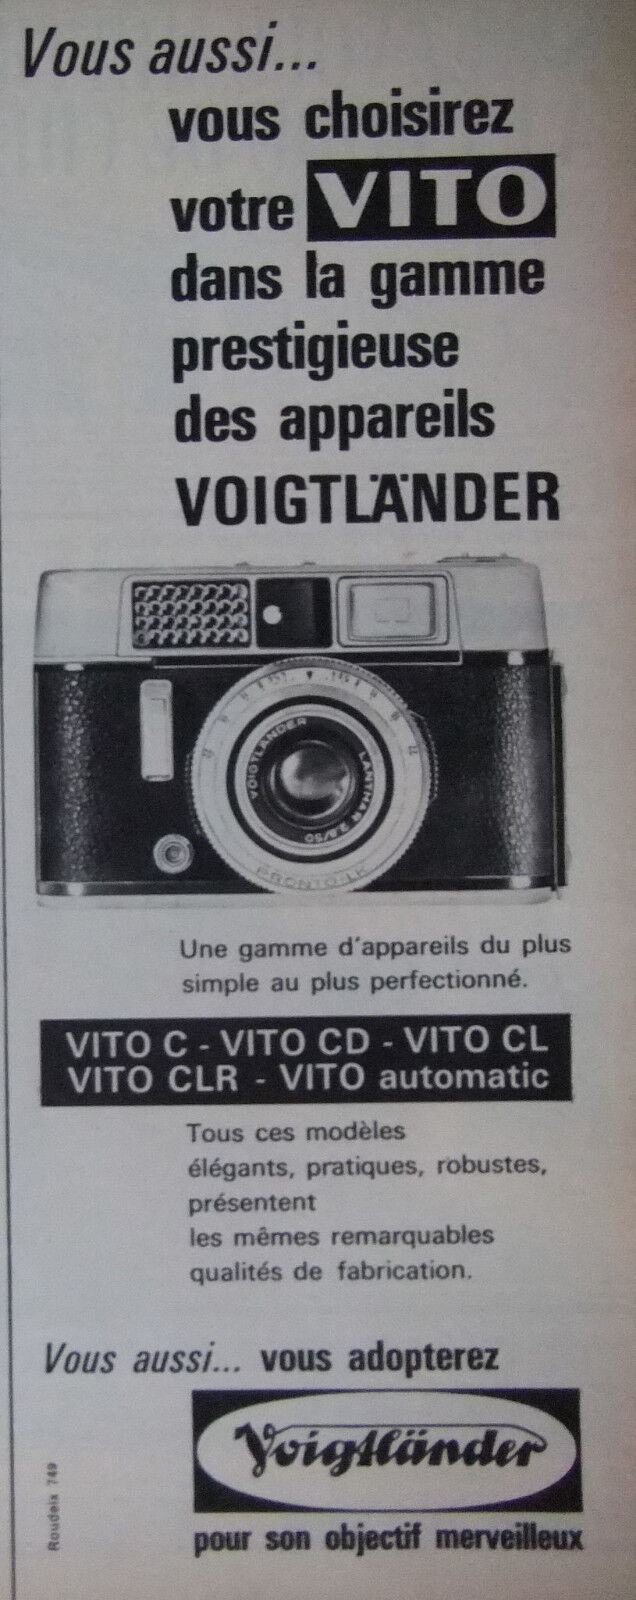 1962 VOIGTLANDER VITO AUTOMATIC PRESS ADVERTISING DEVICE - ADVERTISING